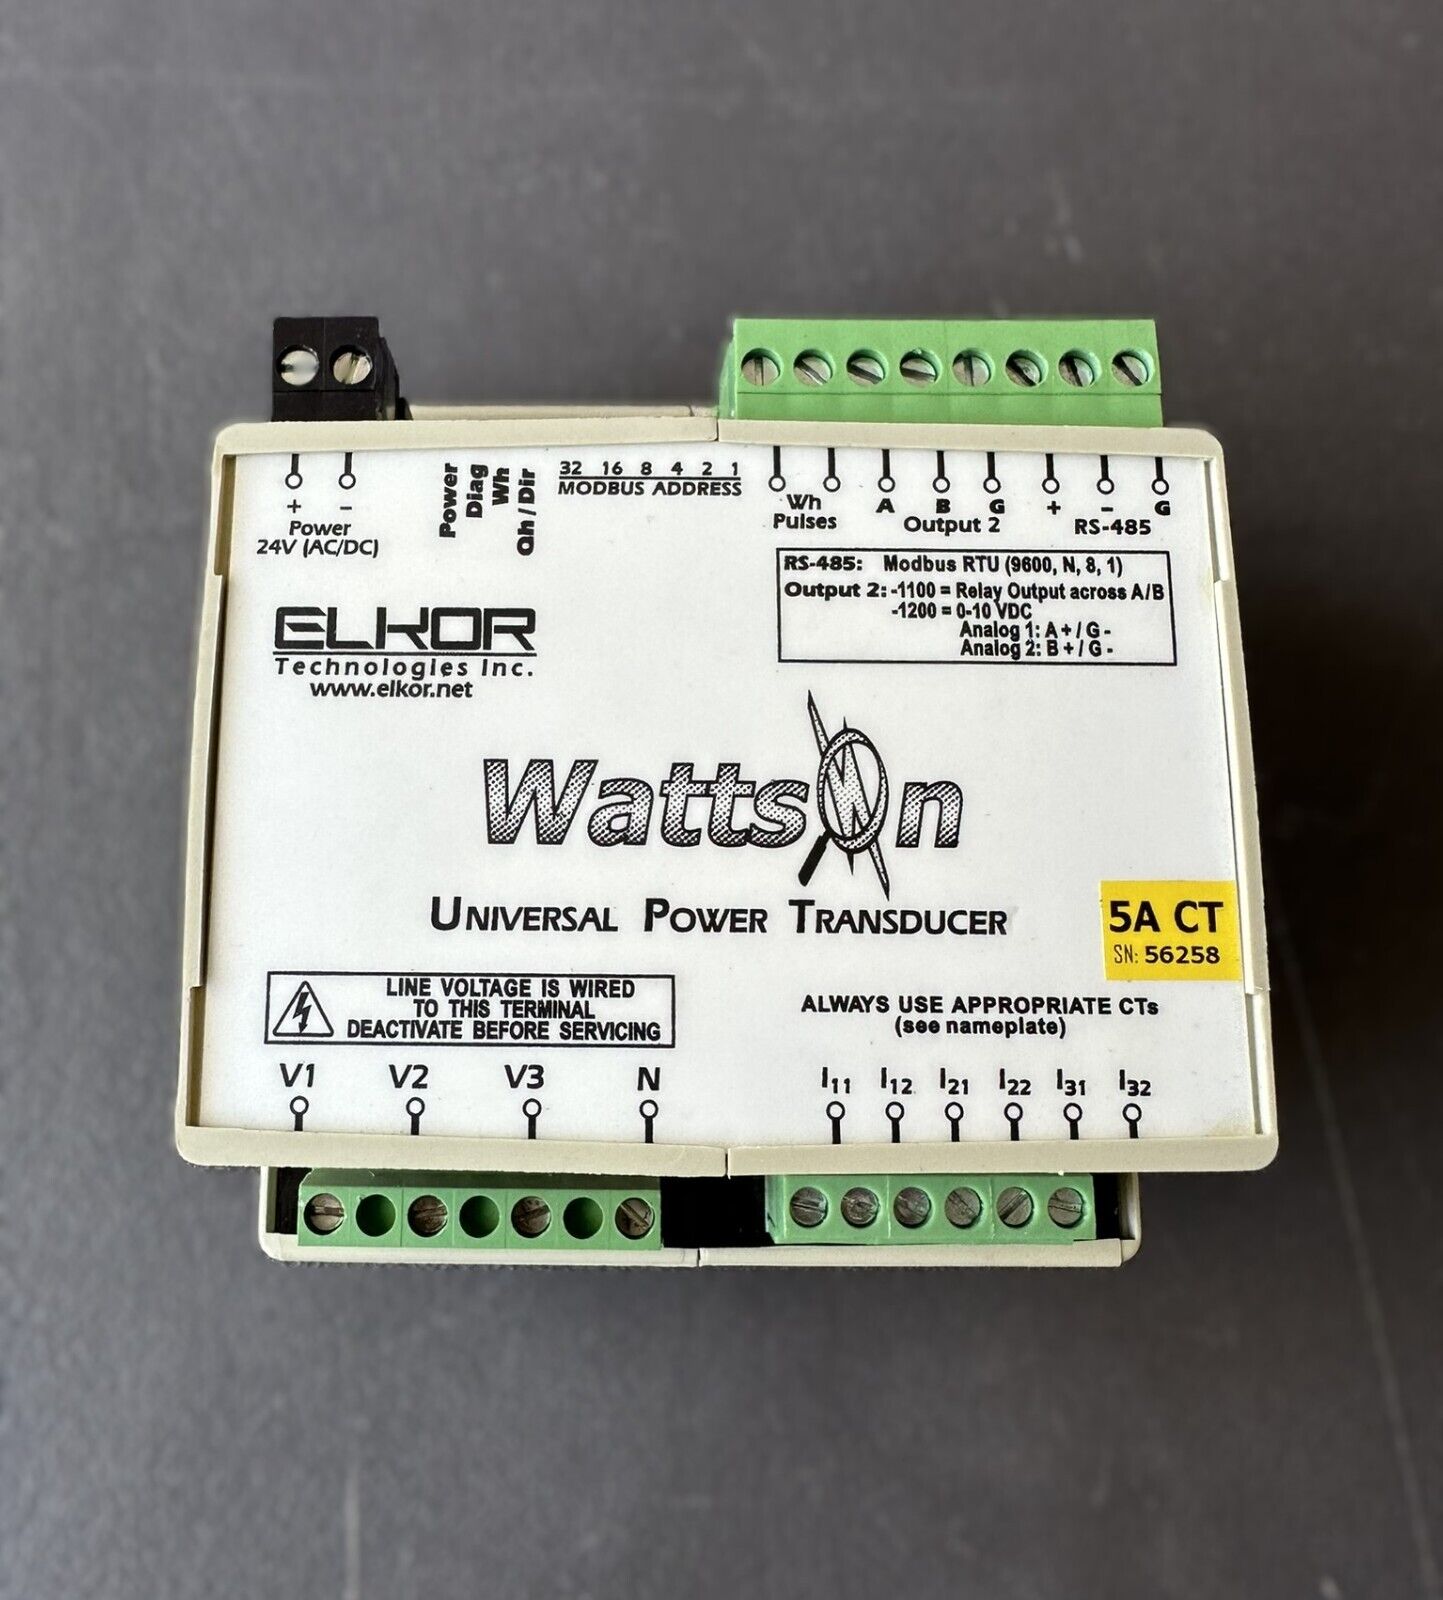 Elkor Watson 1100-5A Universal Power Transducer